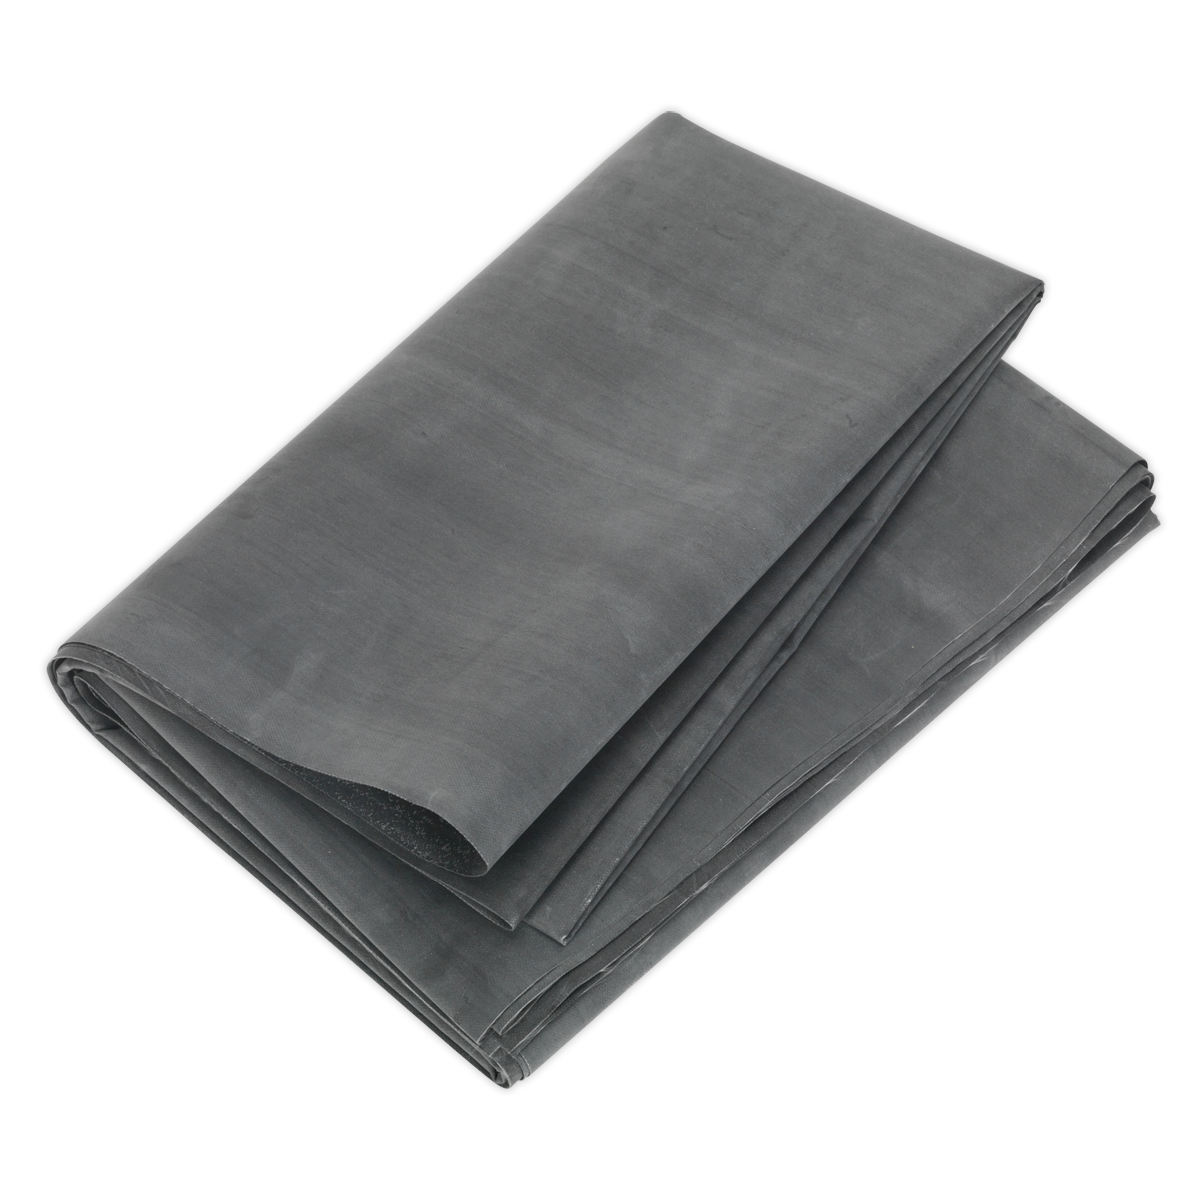 Sealey Spark Proof Welding Blanket 1800mm x 1300mm